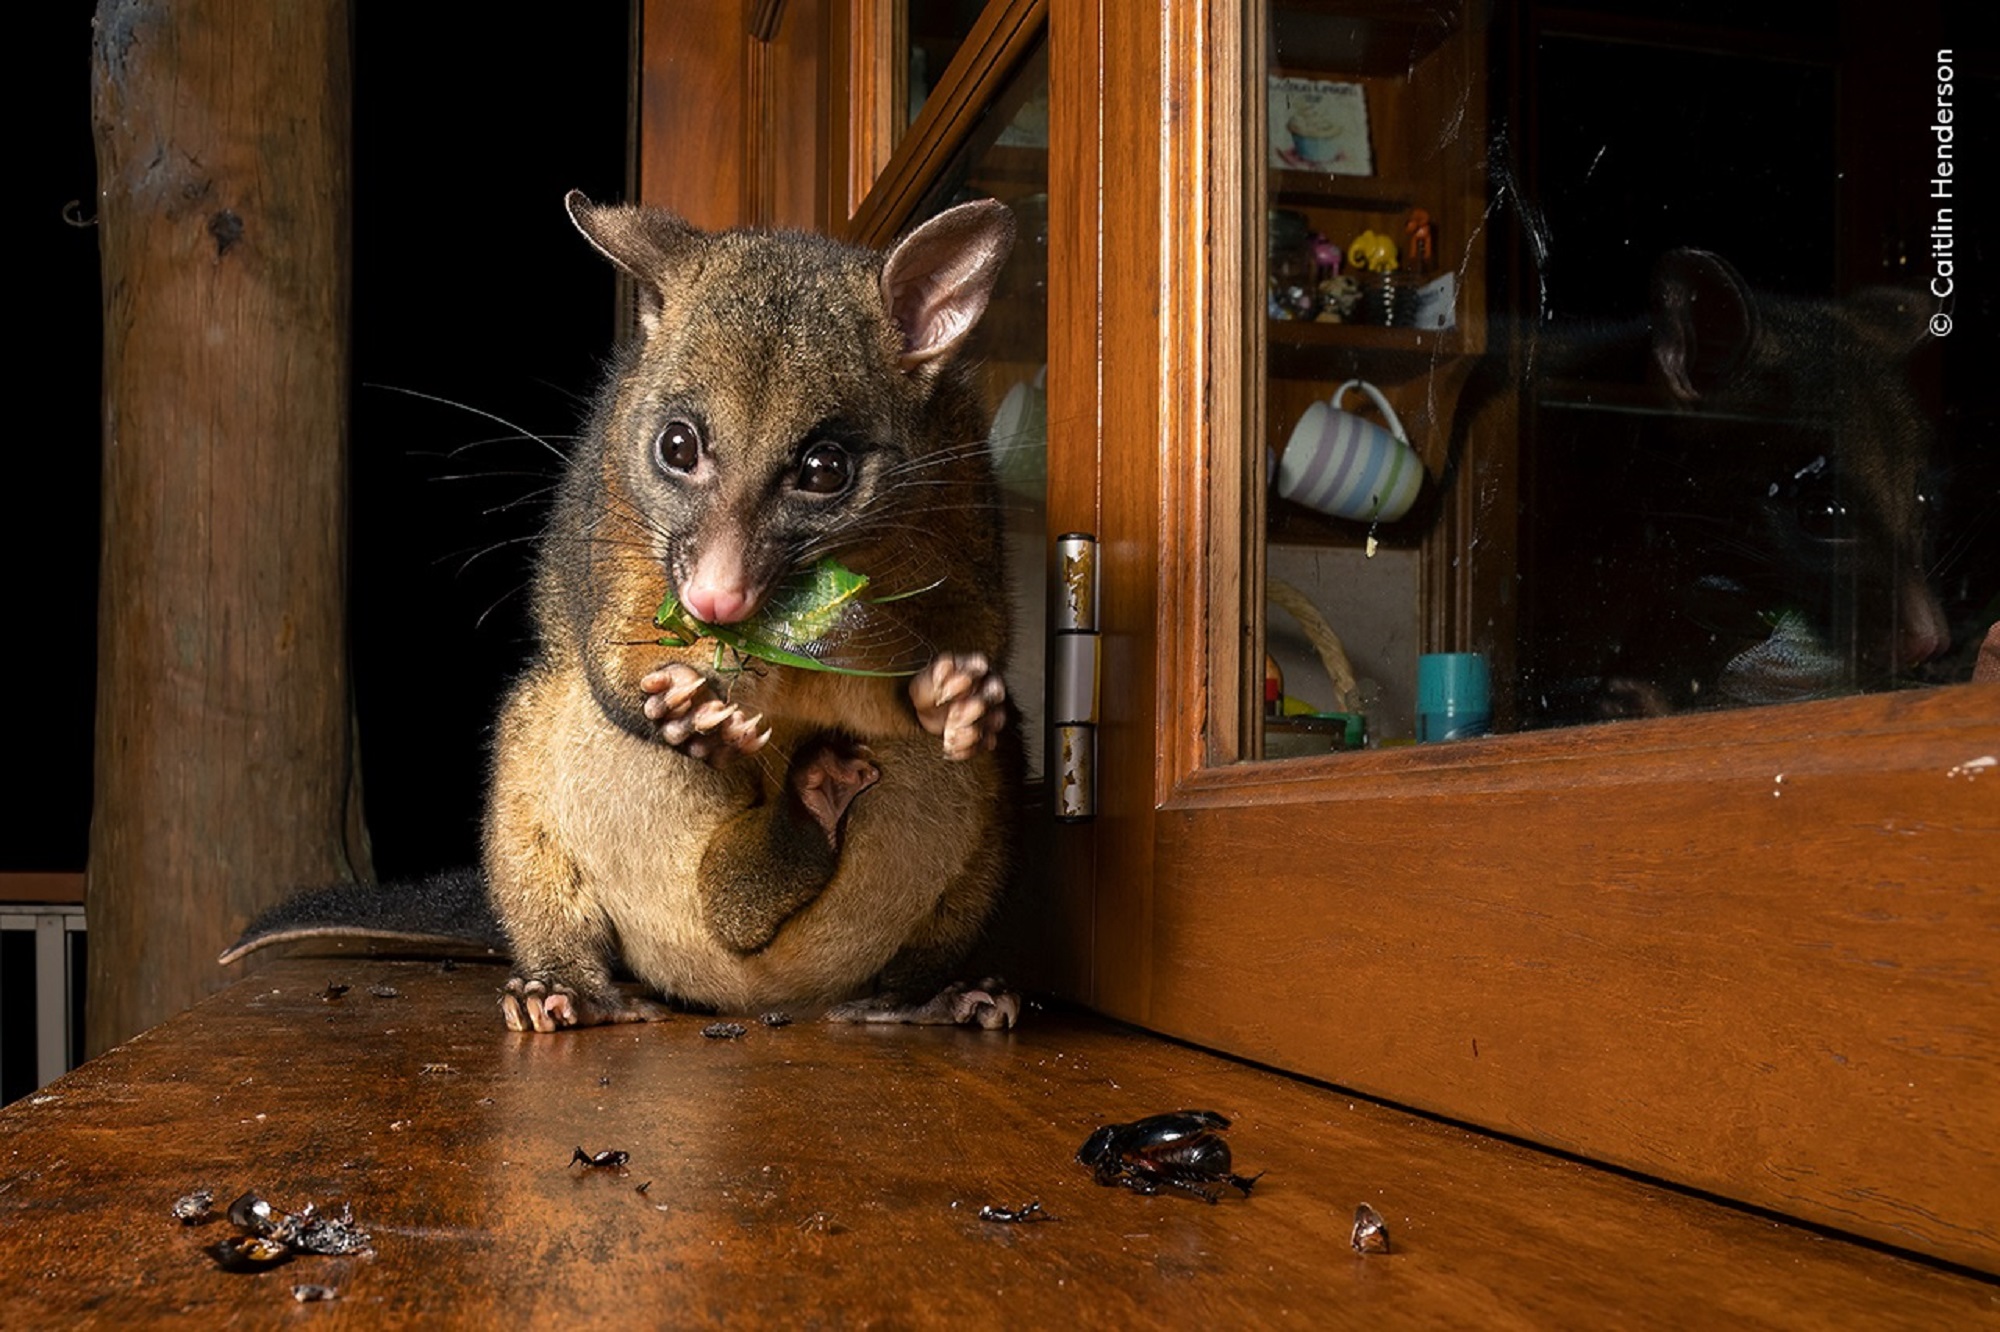 11 jaw-dropping photos of marsupials, mushrooms, and more